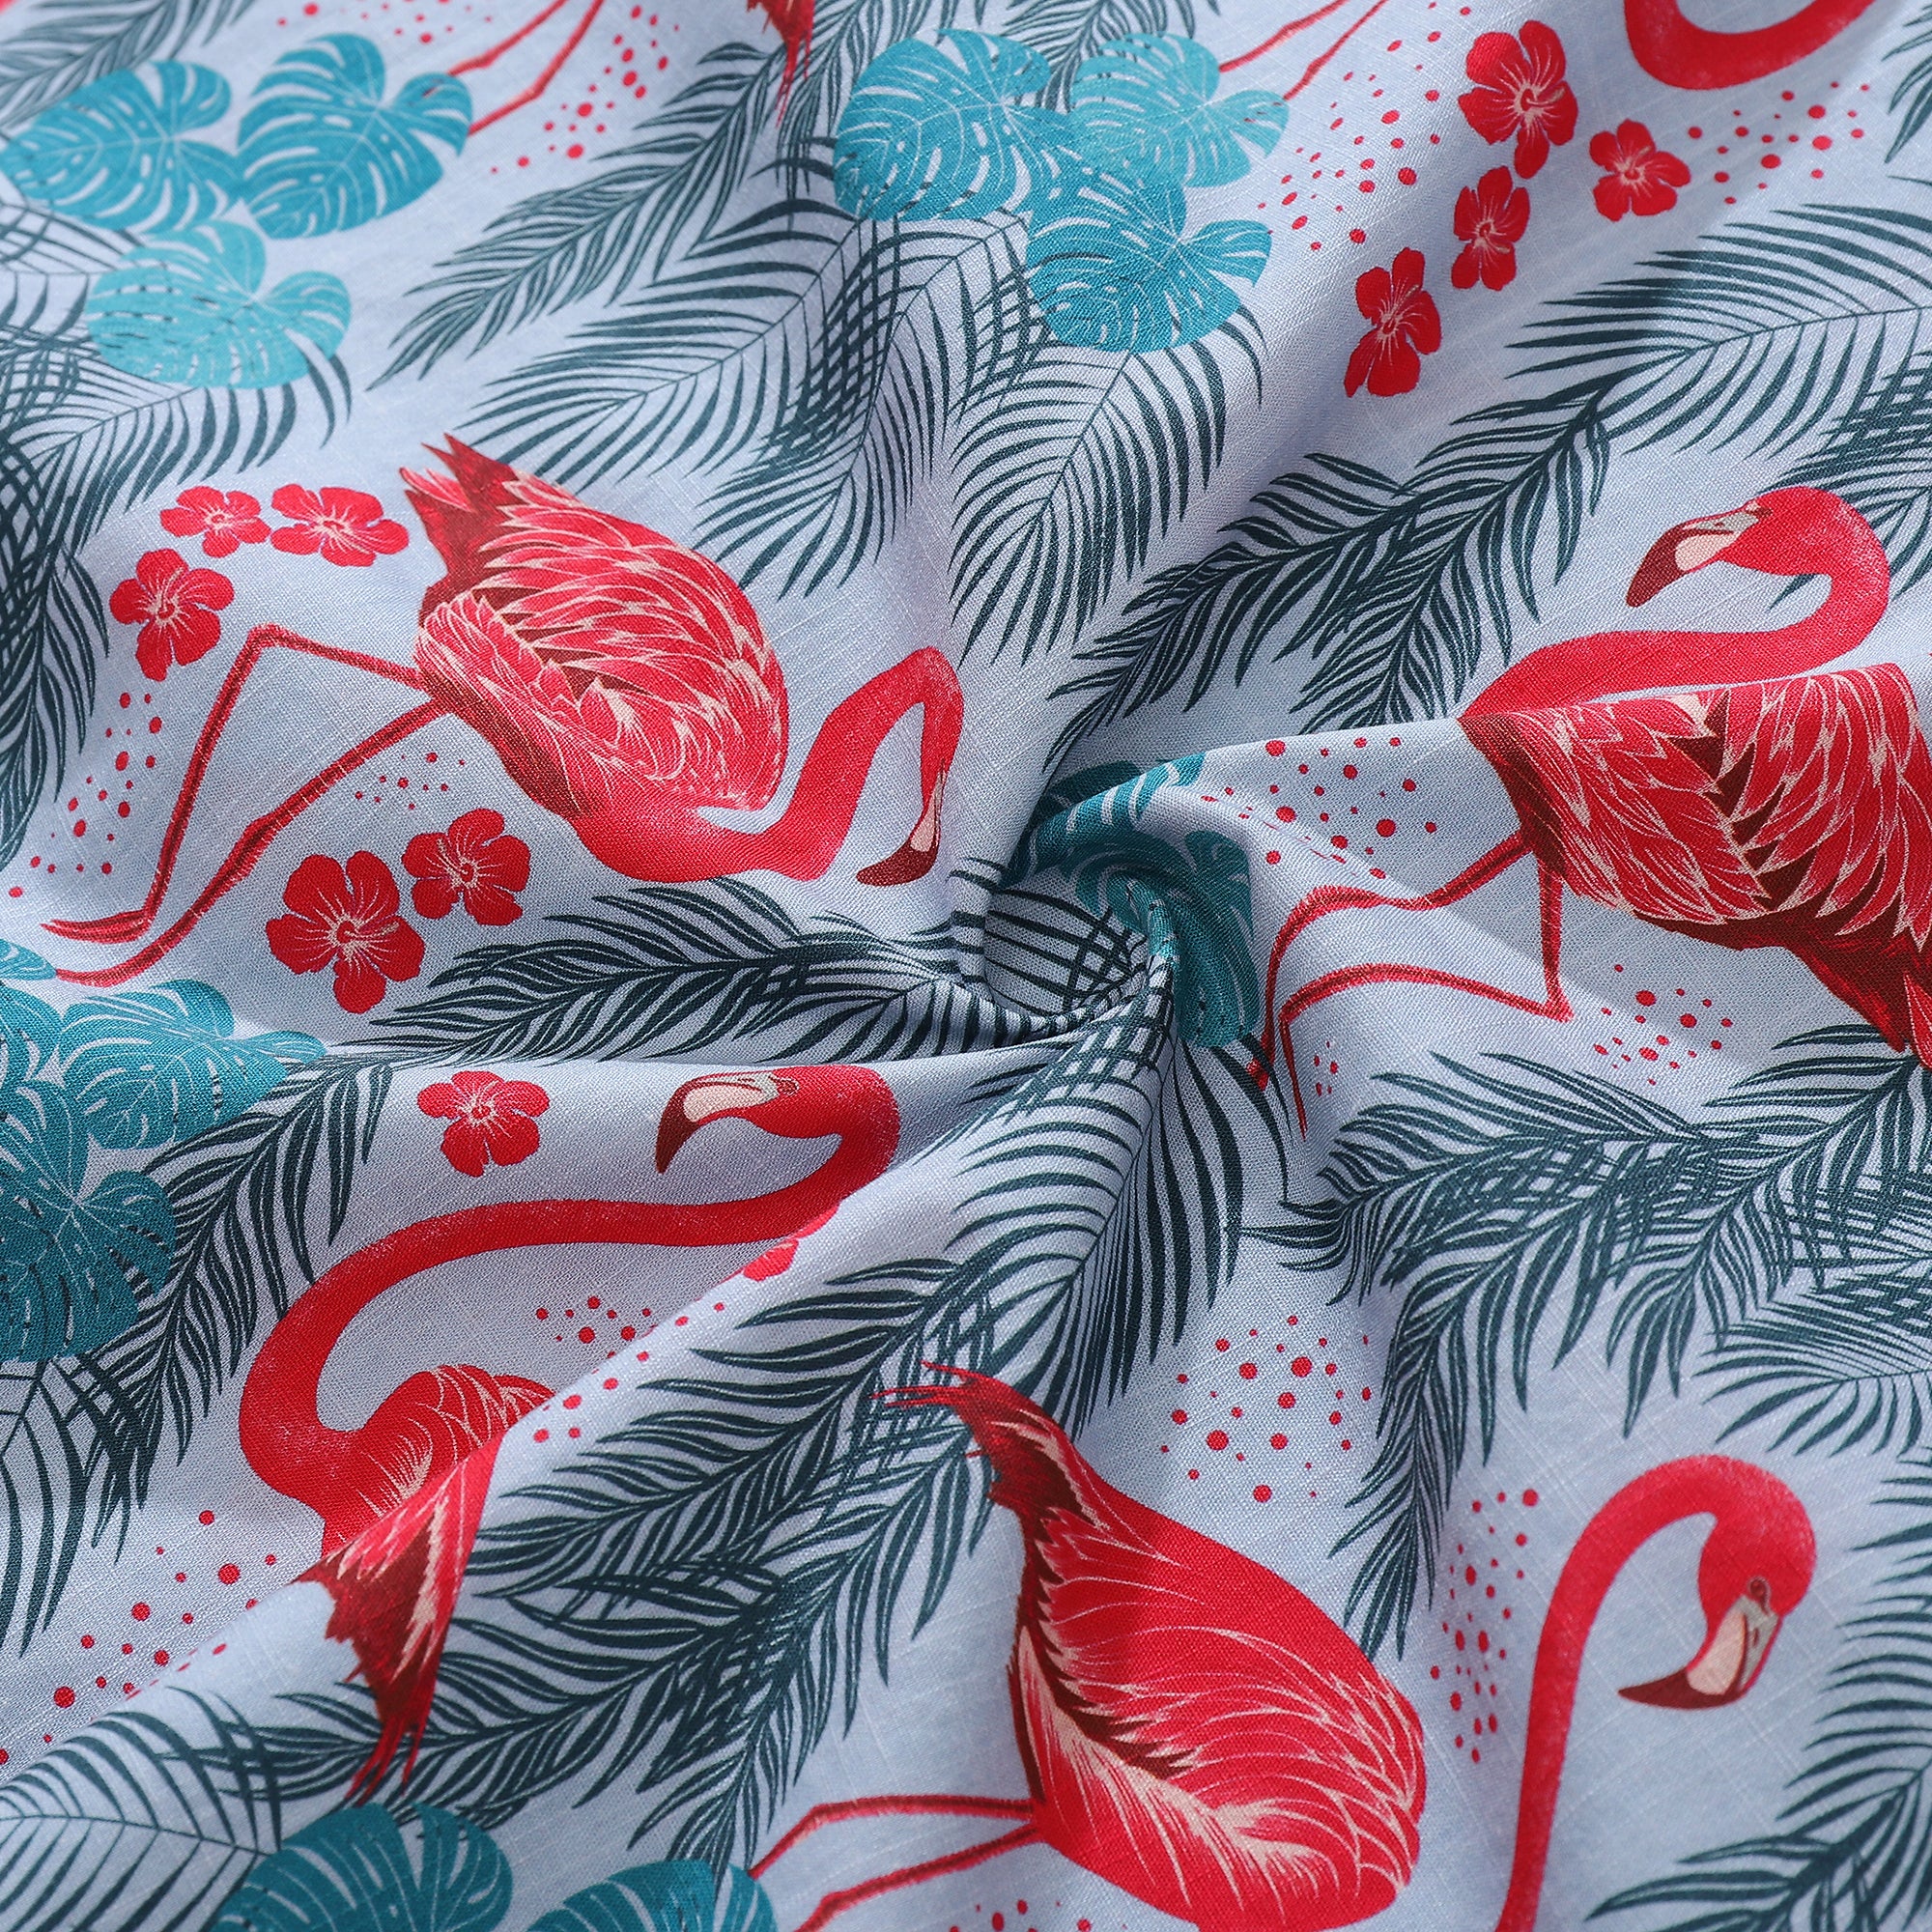 Men's Funky Hawaiian Shirt Flamingo Bay Print Designed by Maria Elena COCO Cotton Button-down